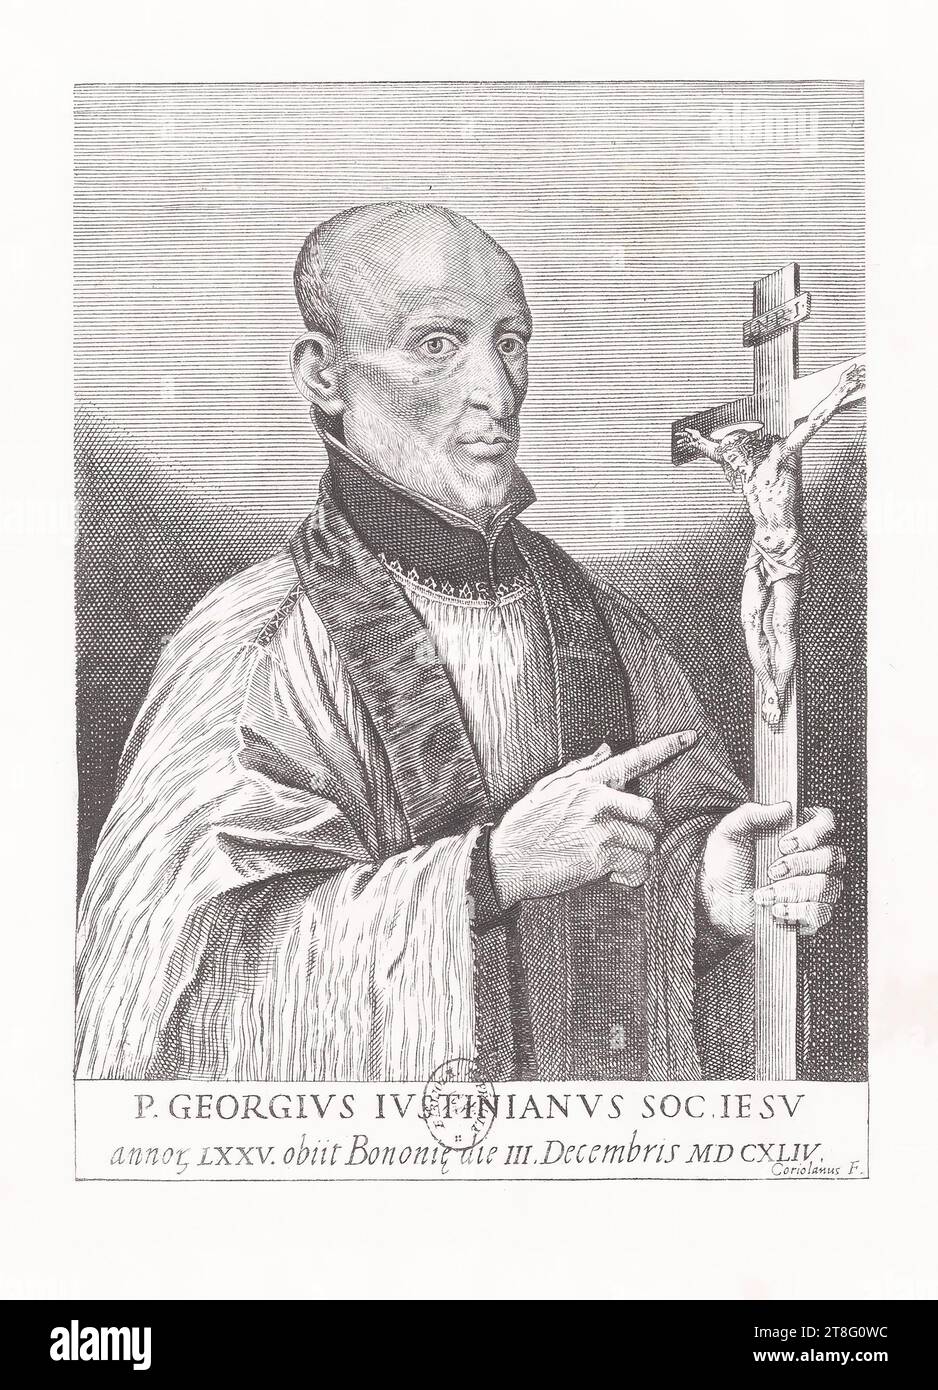 P. GEORGIVS IVSTINIANVS SOC. IESV, 75 Jahre alt. Er starb am 3. In Bologna Dezember 1844 Coriolanus Stockfoto